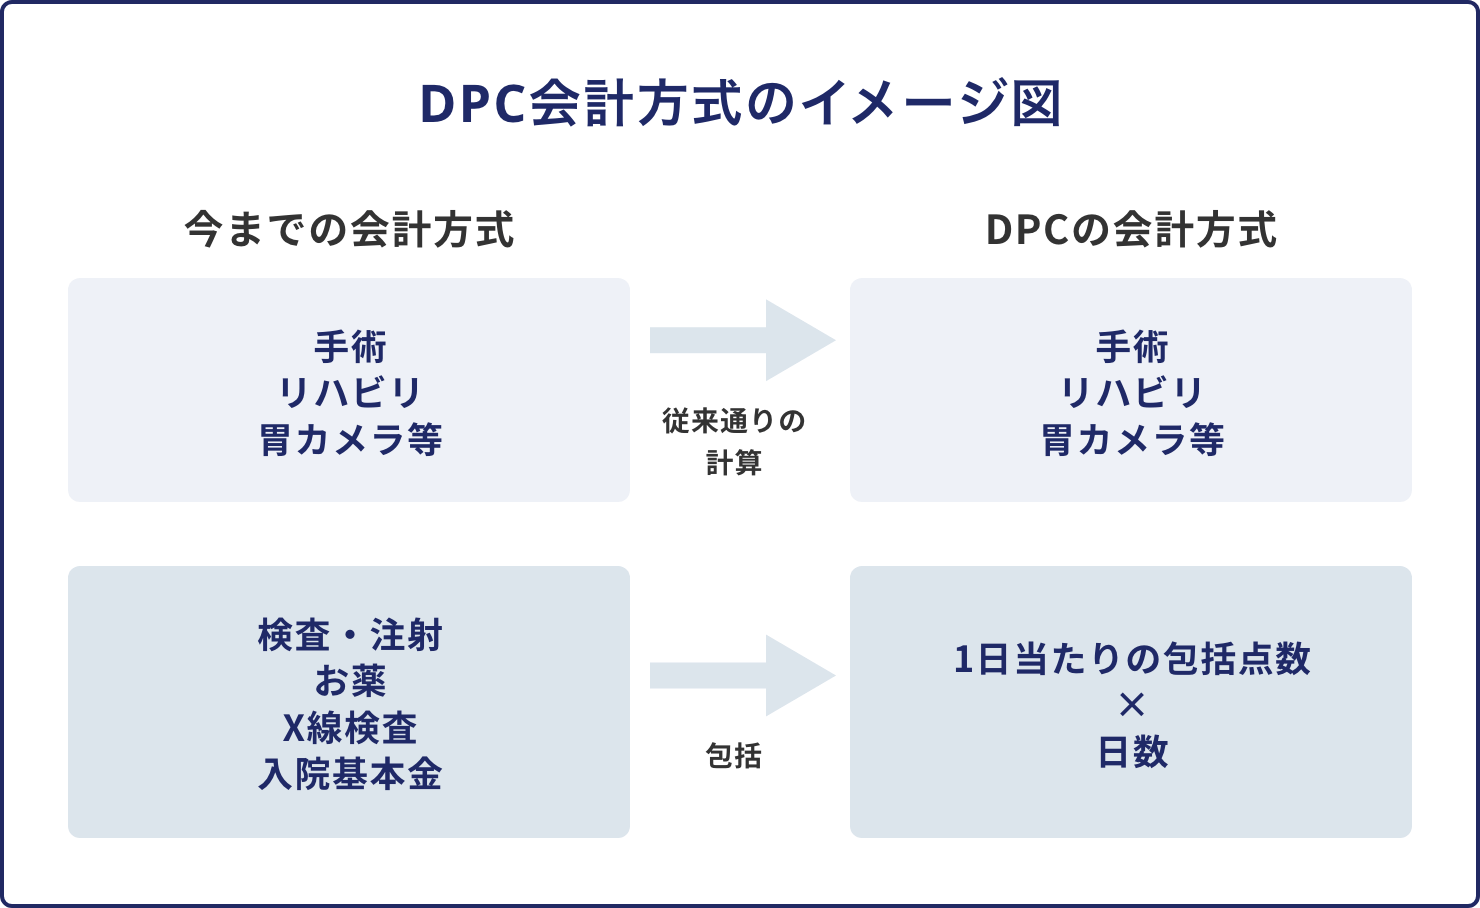 DPC会計方式のイメージ図